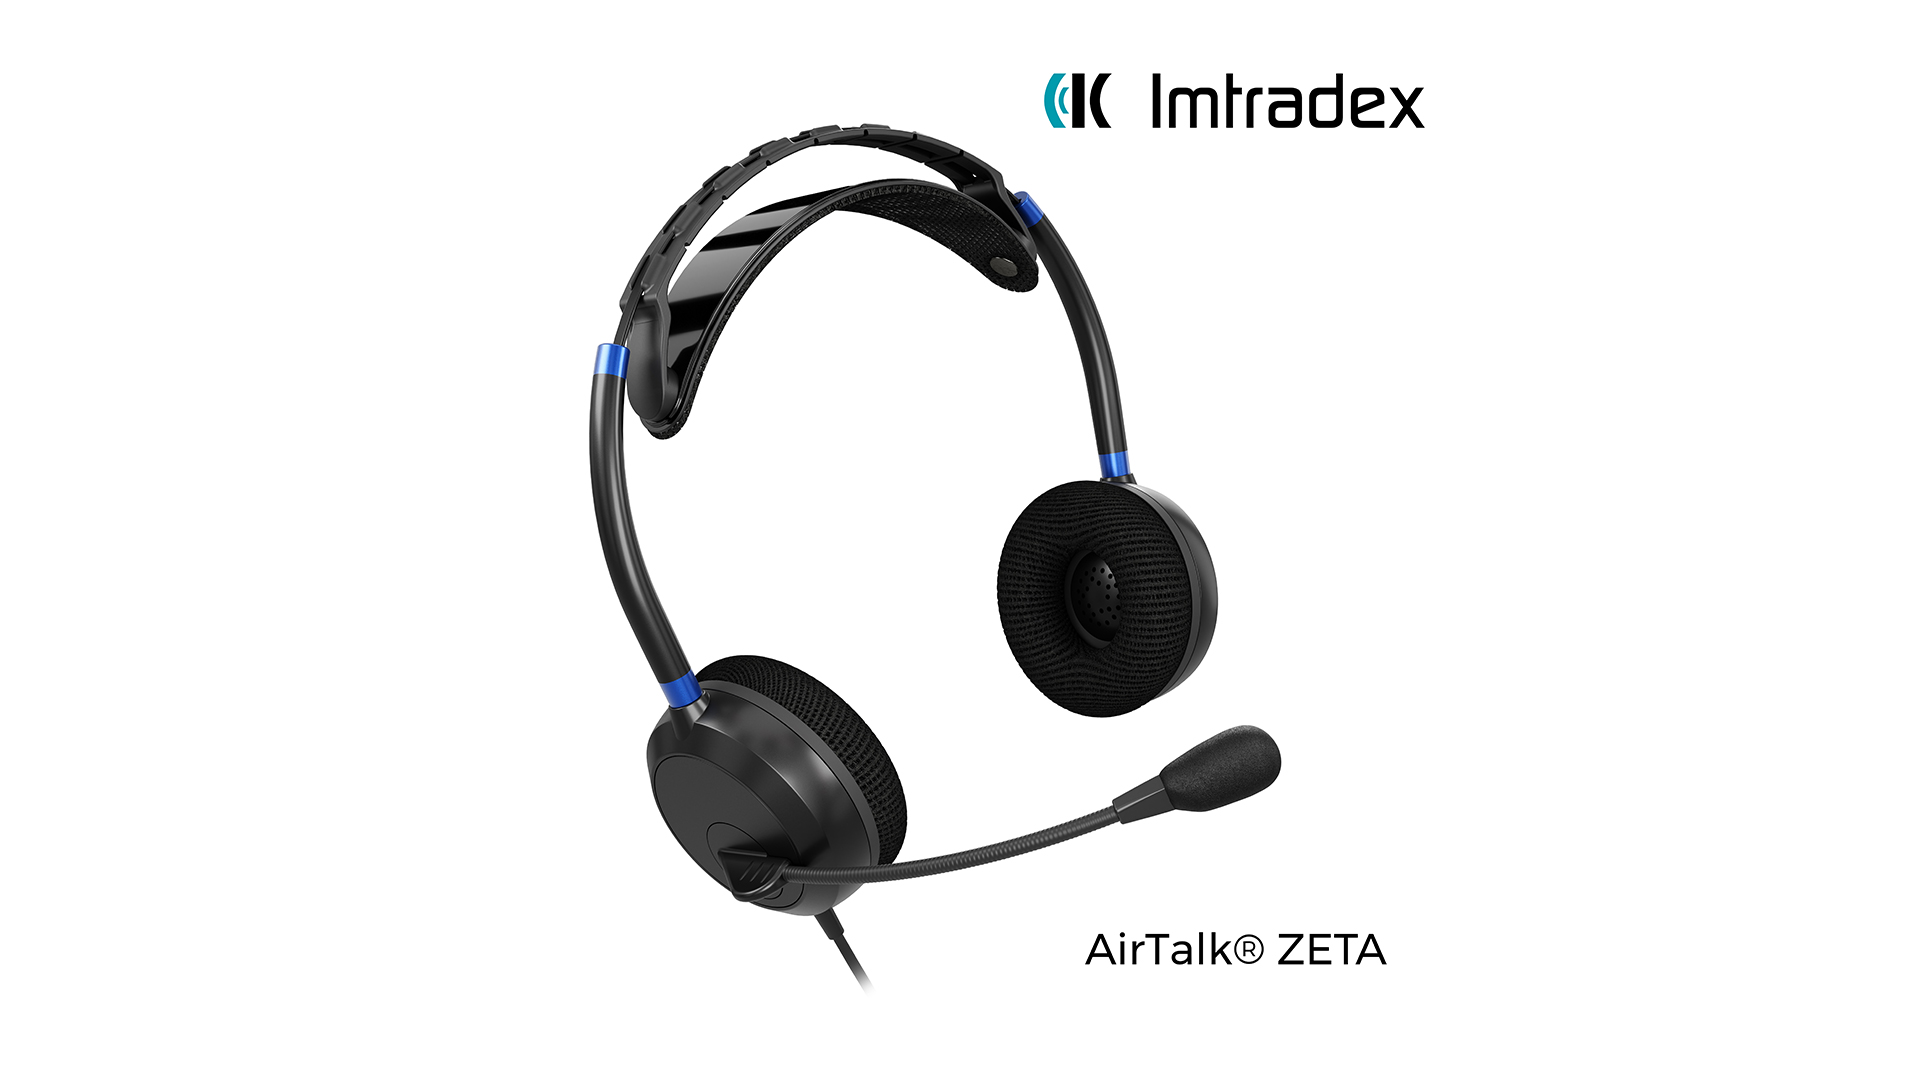 Imtradex AirTalk® ZETA – light On-The-Ear solution